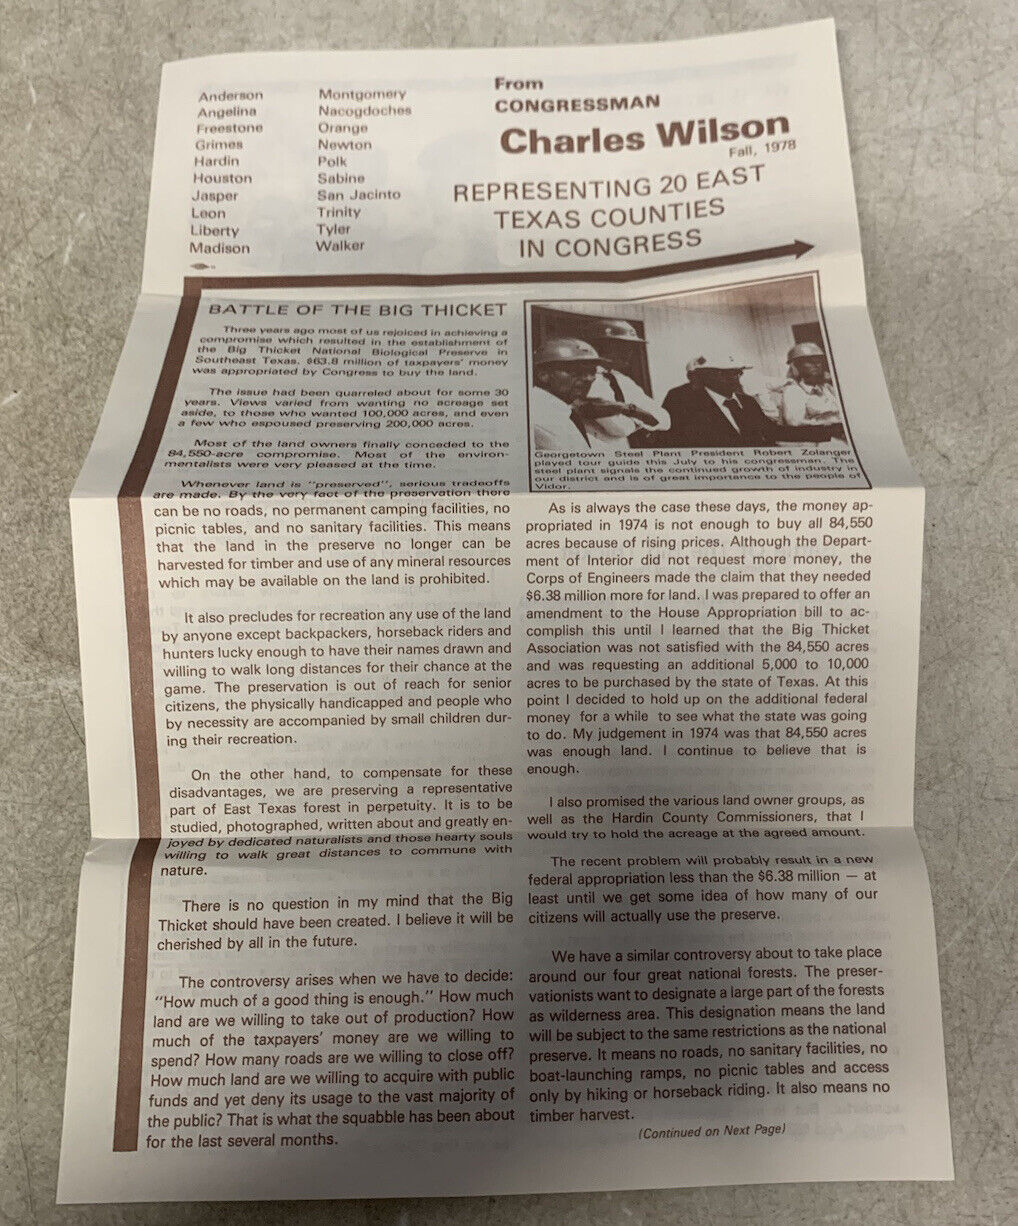 charles wilson newsletter 1978 congressman east texas history Big Thicket